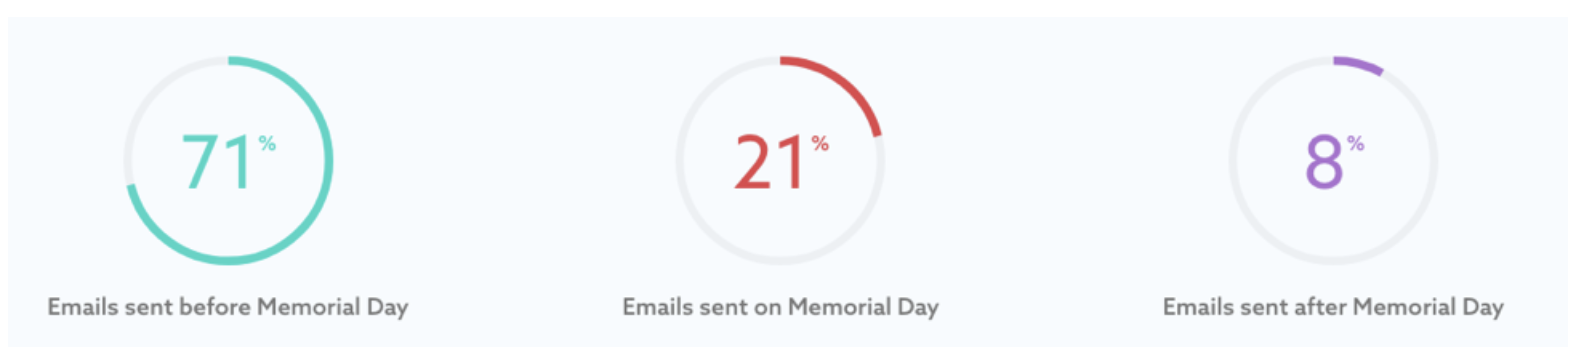 Emails sent around Memorial Day